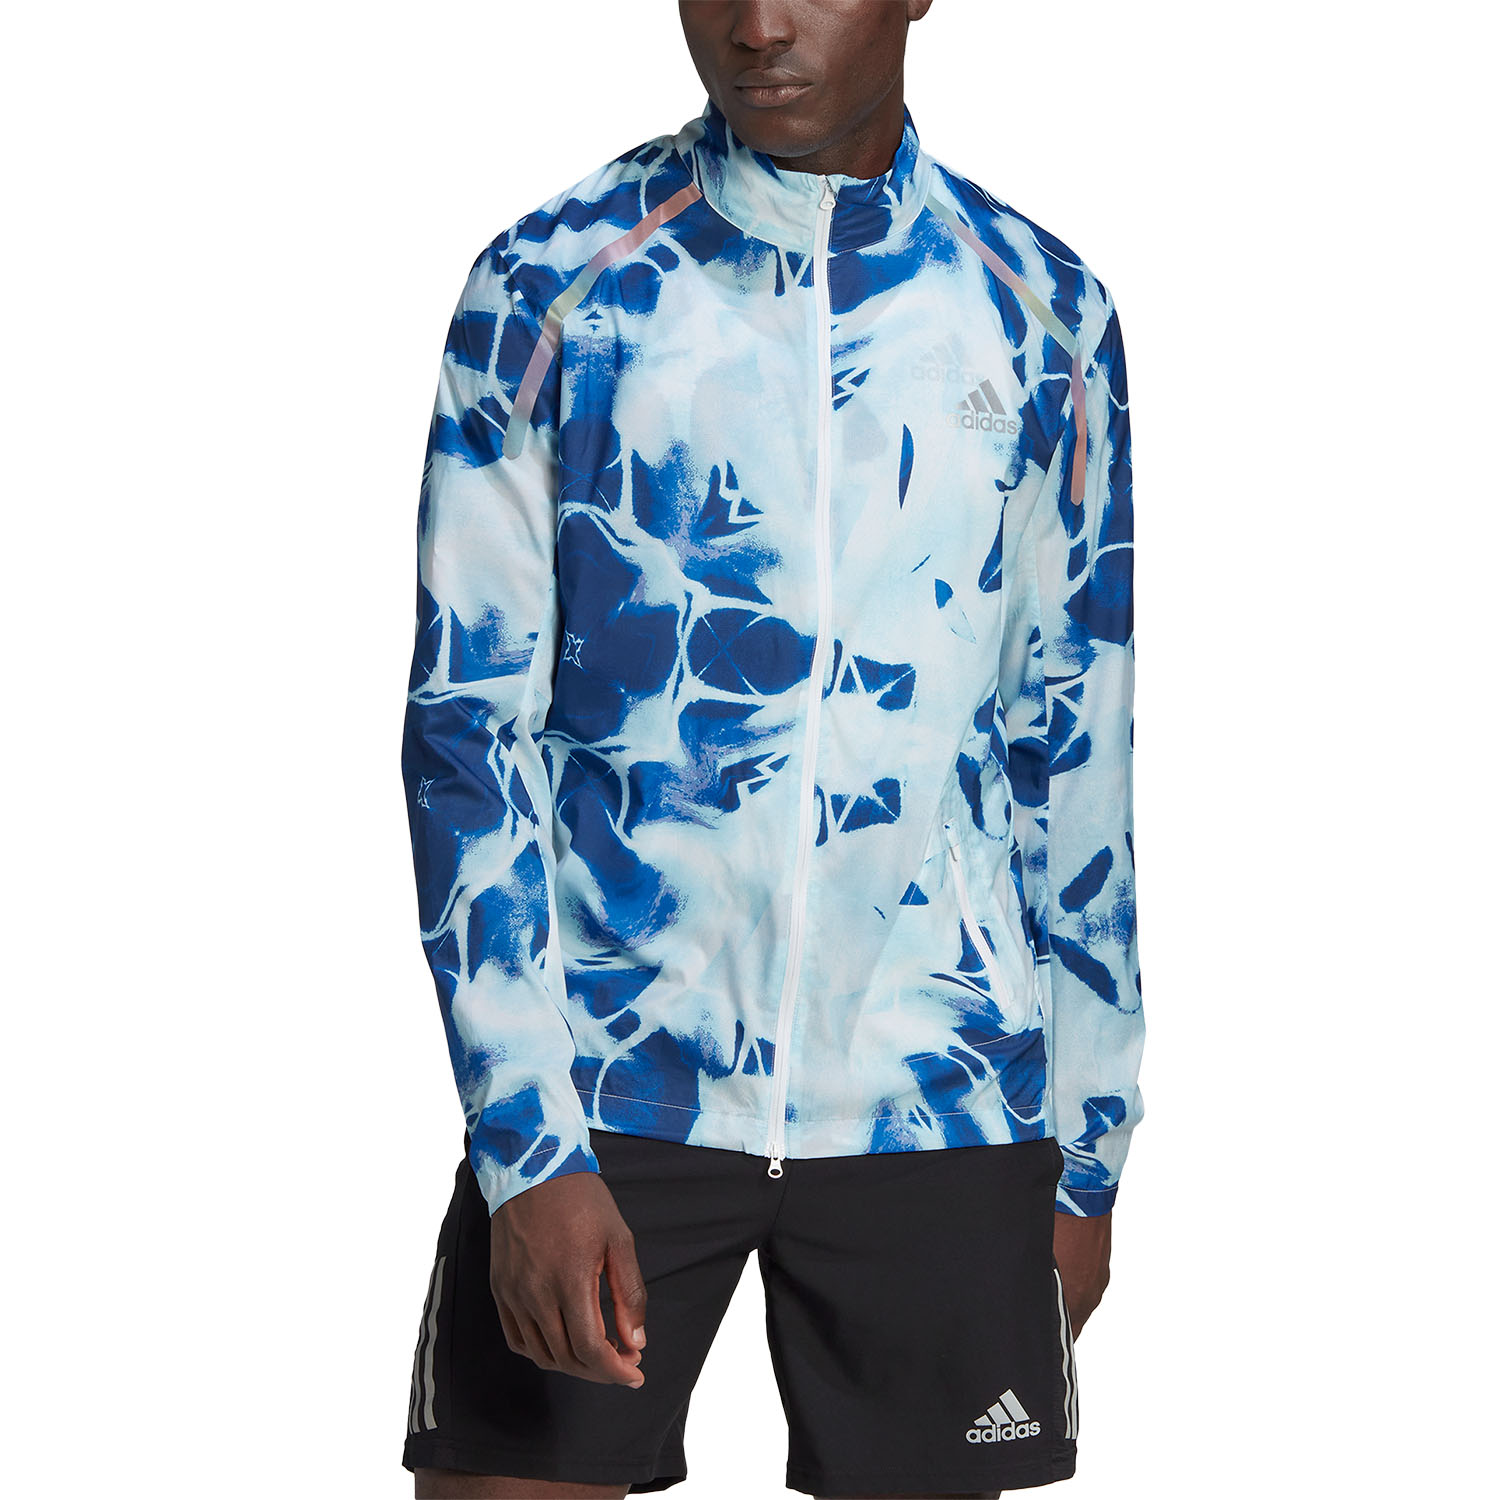 adidas Marathon Graphic Jacket - White/Royal Blue Print